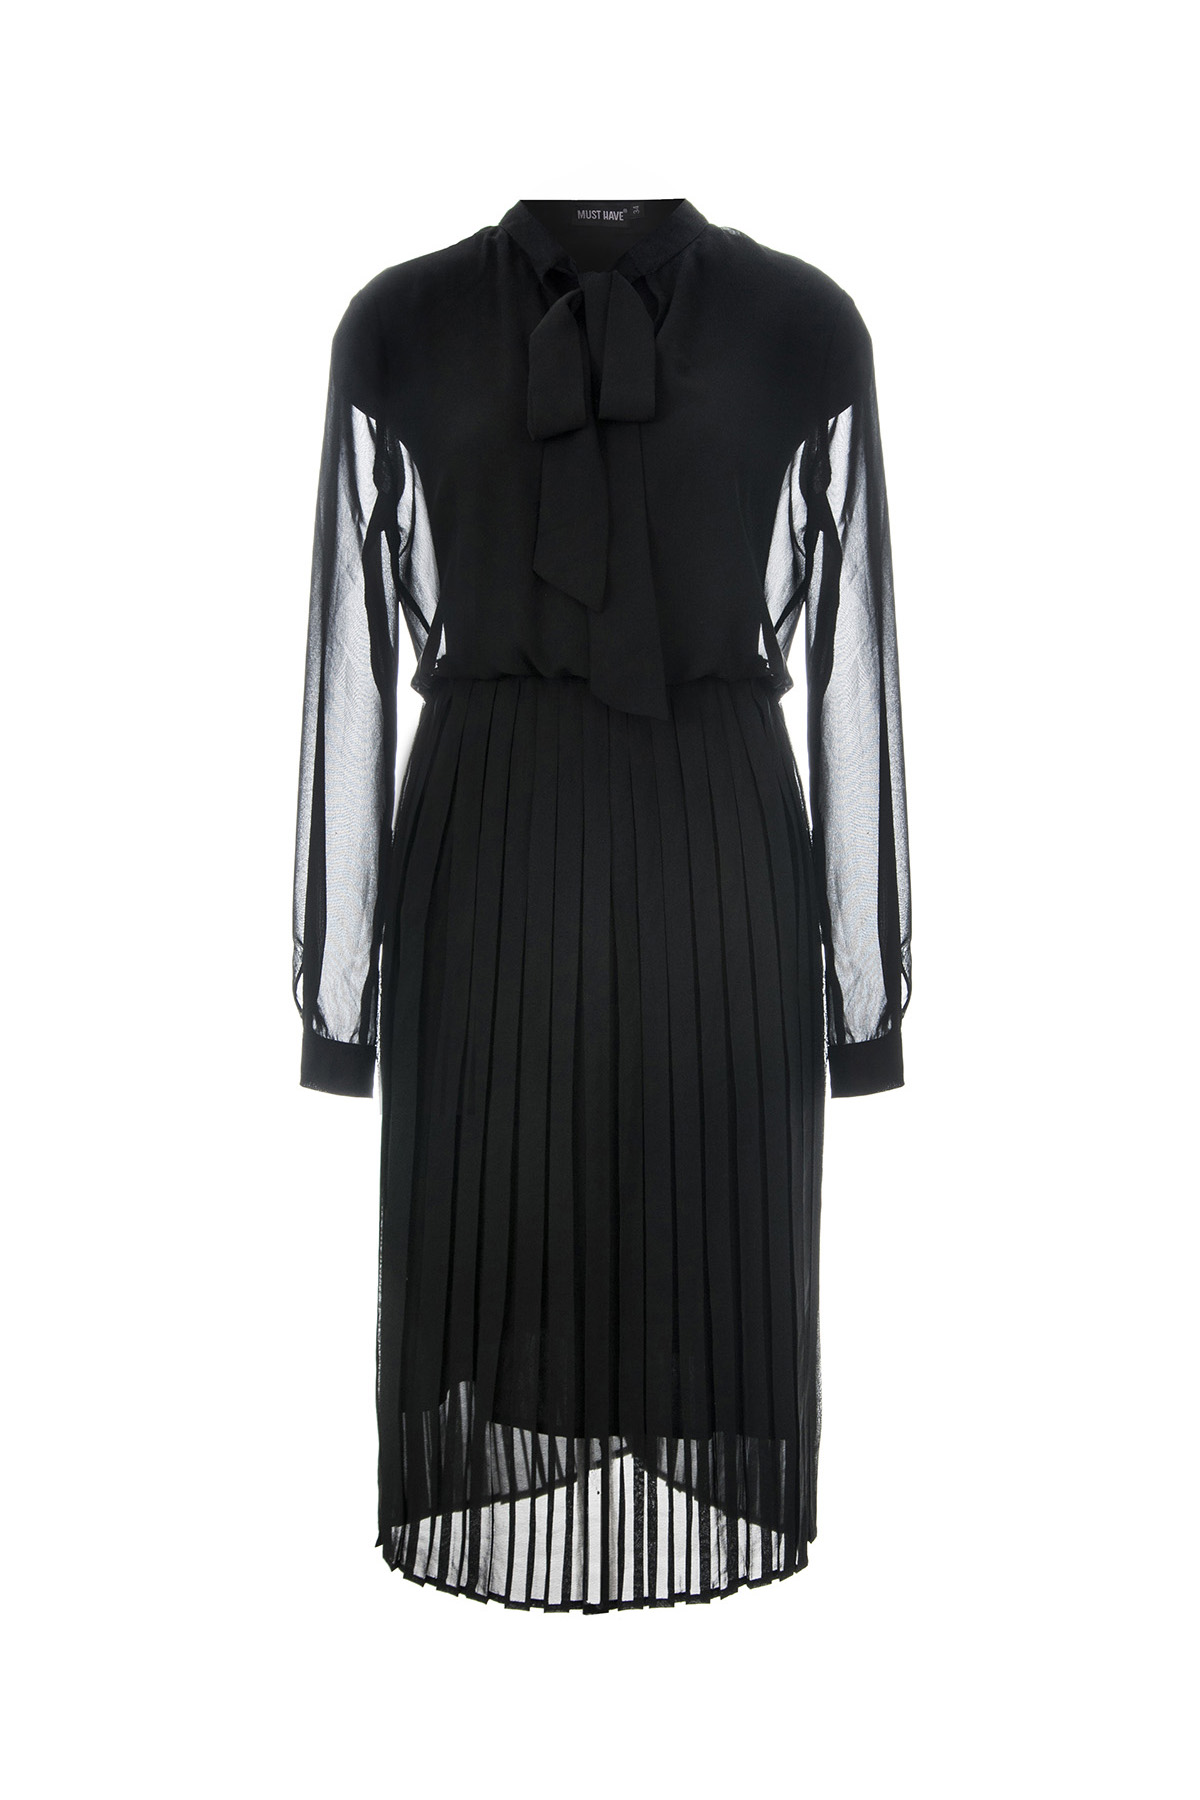 Black chiffon dress with a bow , photo 6